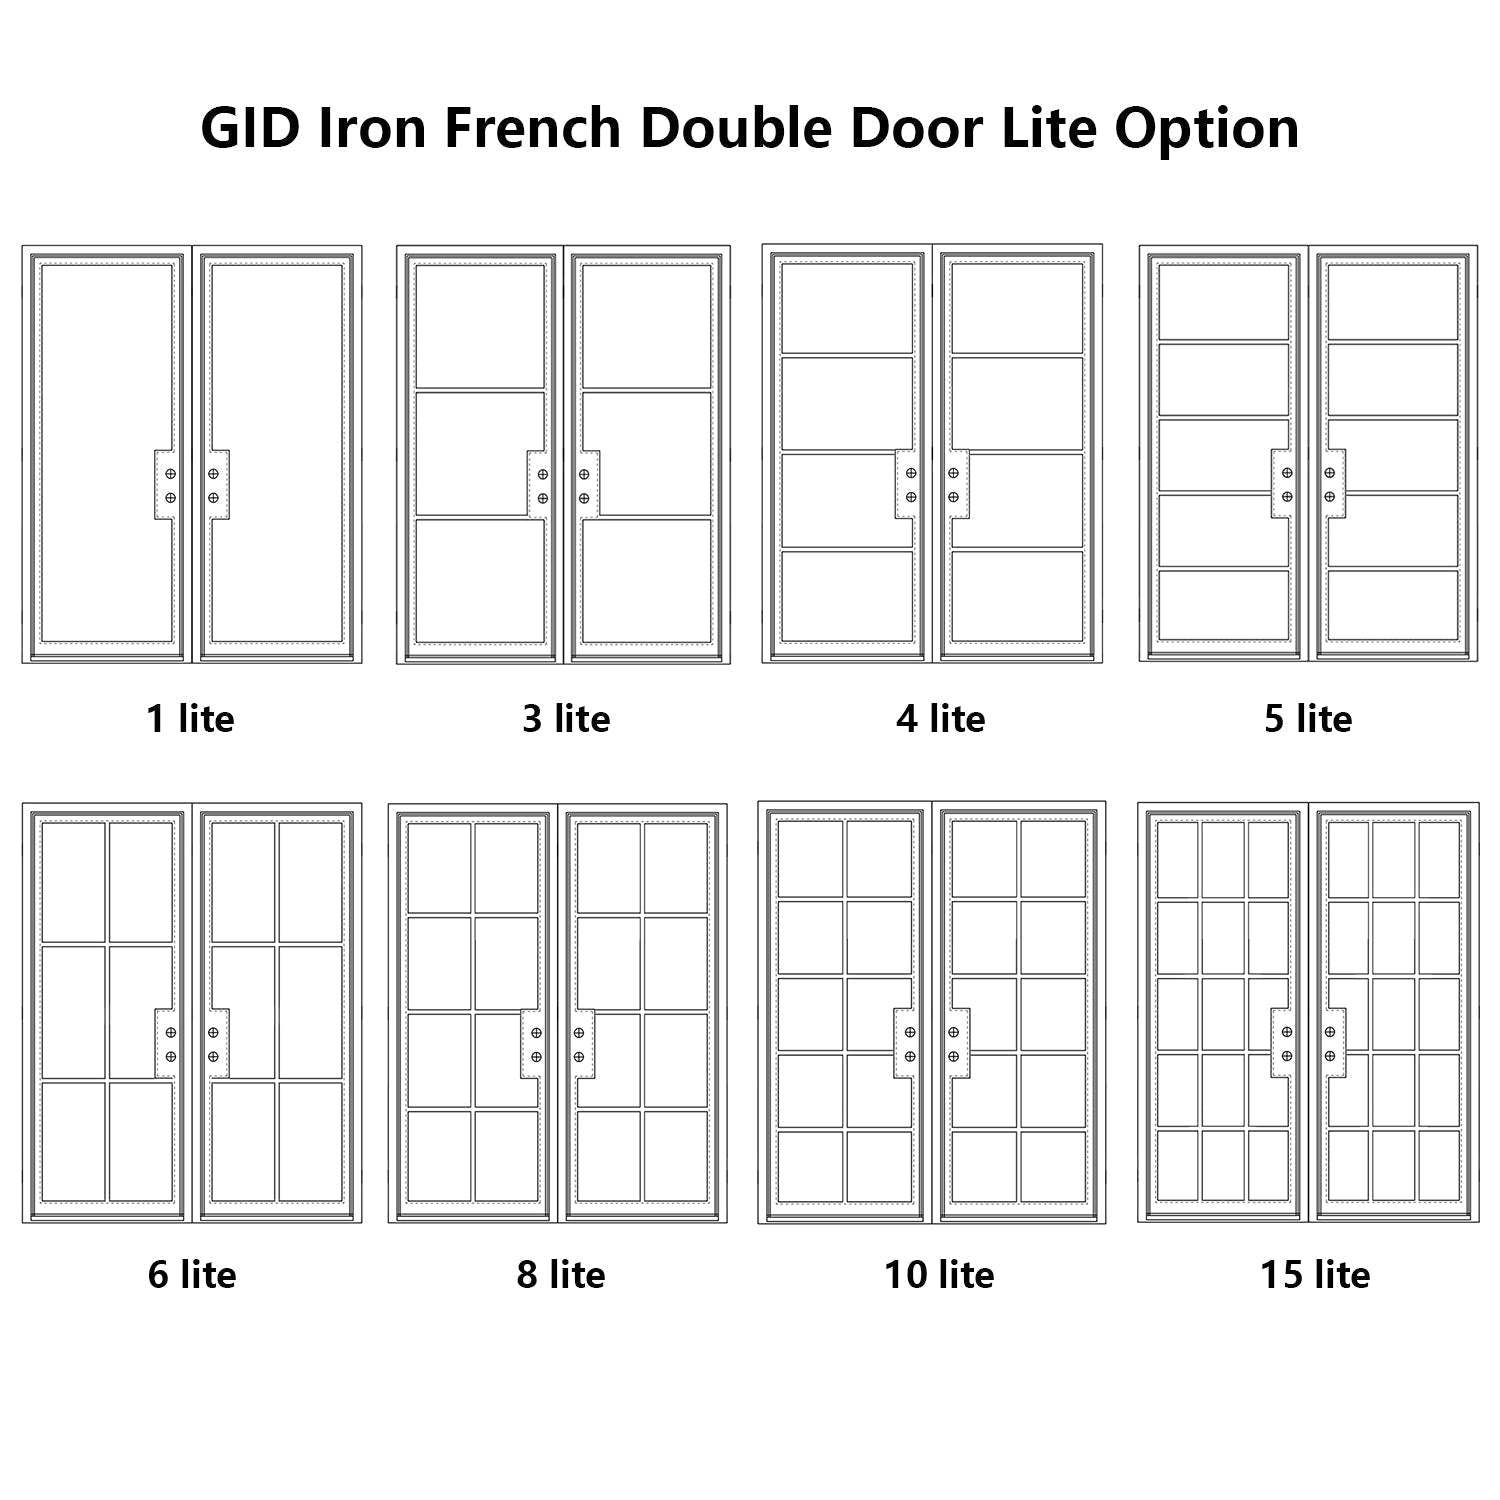 What Size French Doors Do I Need? - ATT Fabrications